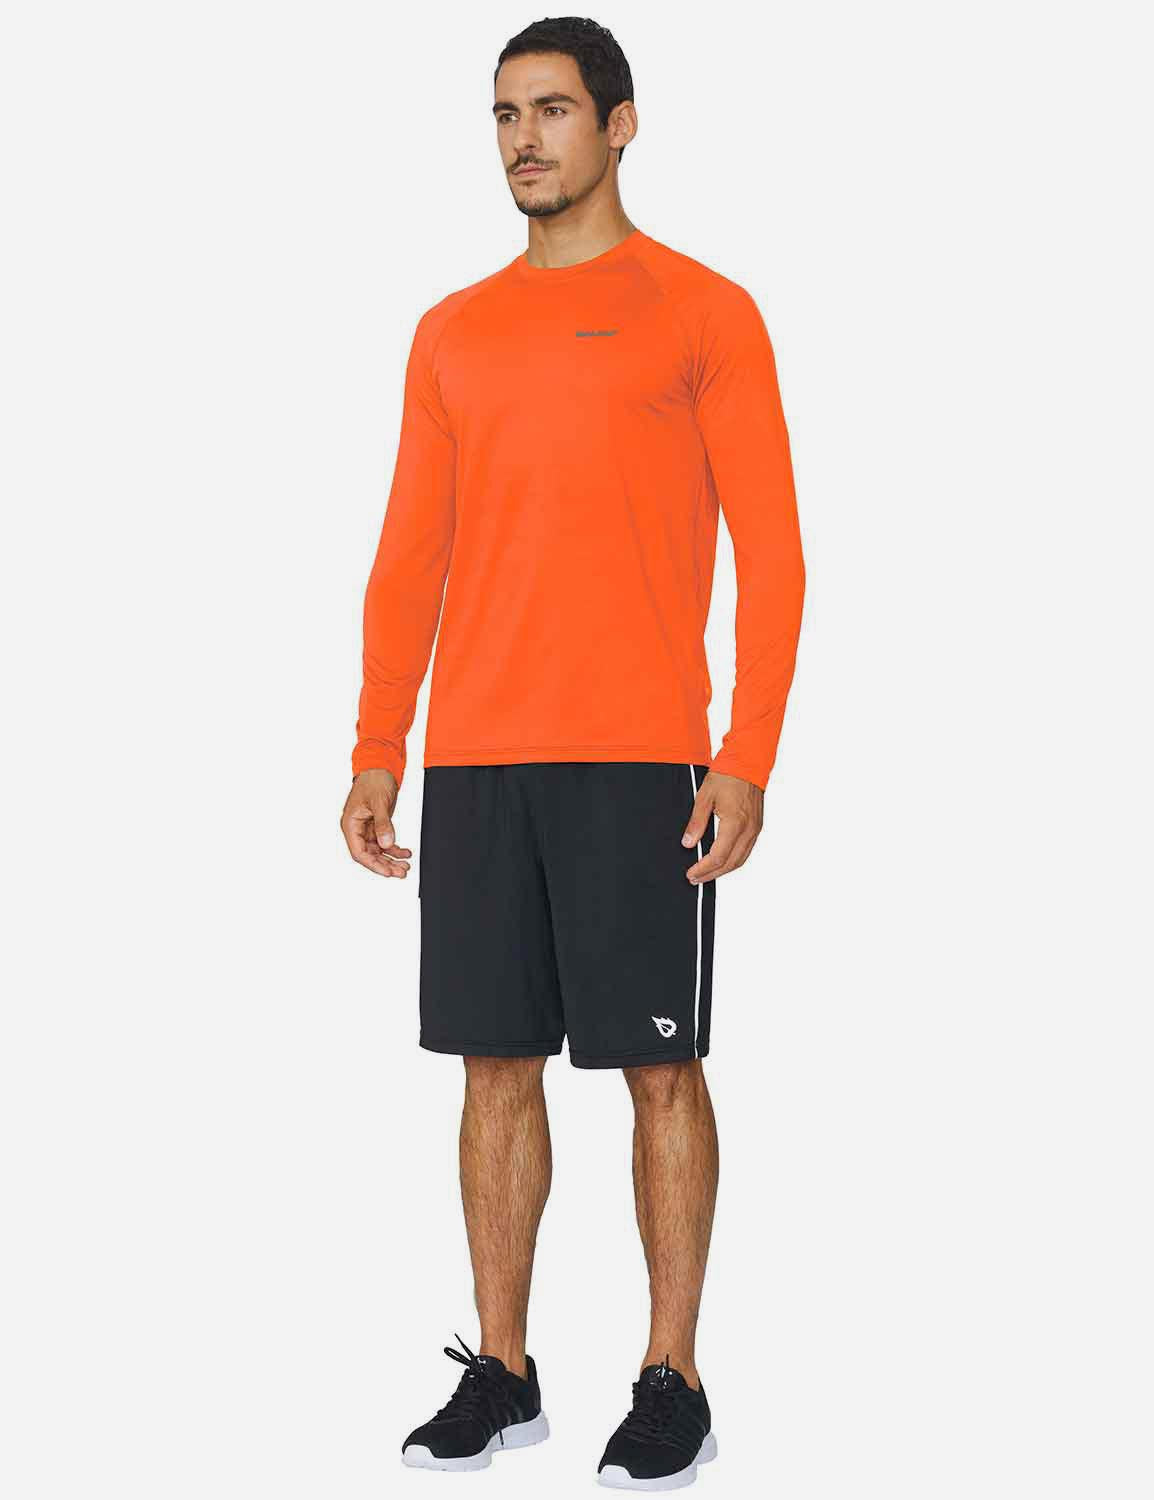 Baleaf Men's Workout Crew-Neck Slim-Cut Long Sleeved Shirt abd195 Orange Full